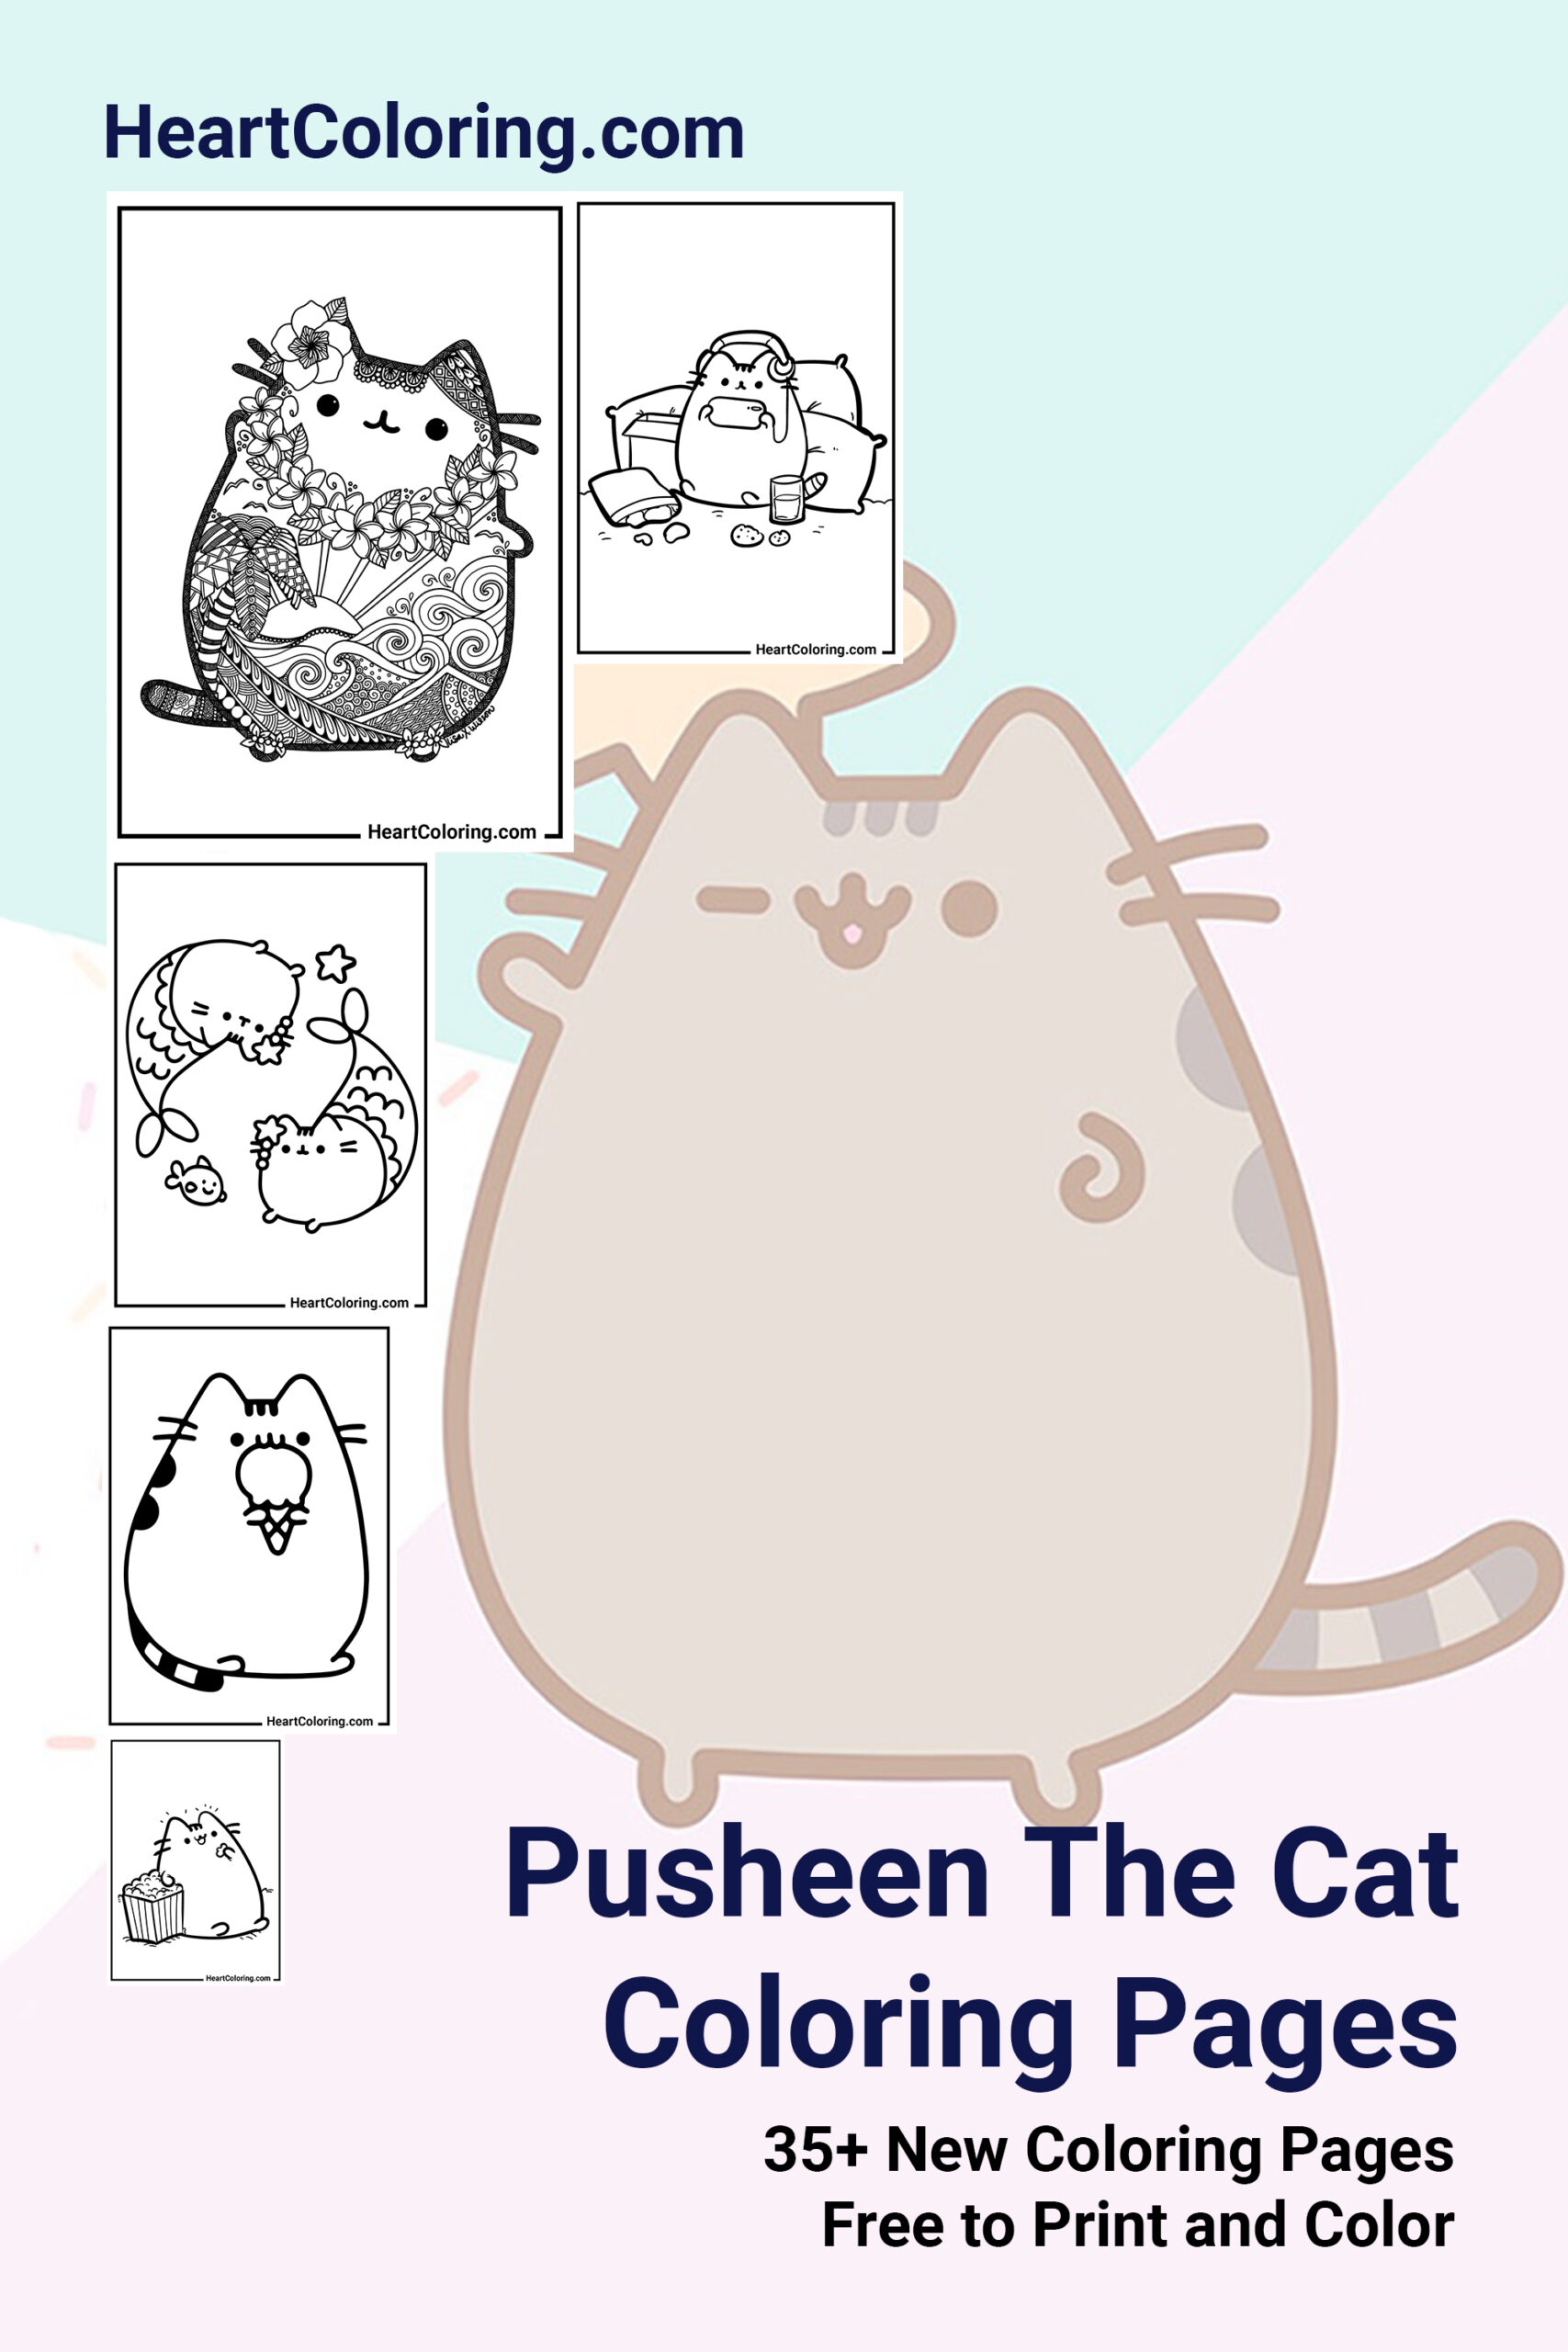 Pusheen : Social Media for Cats